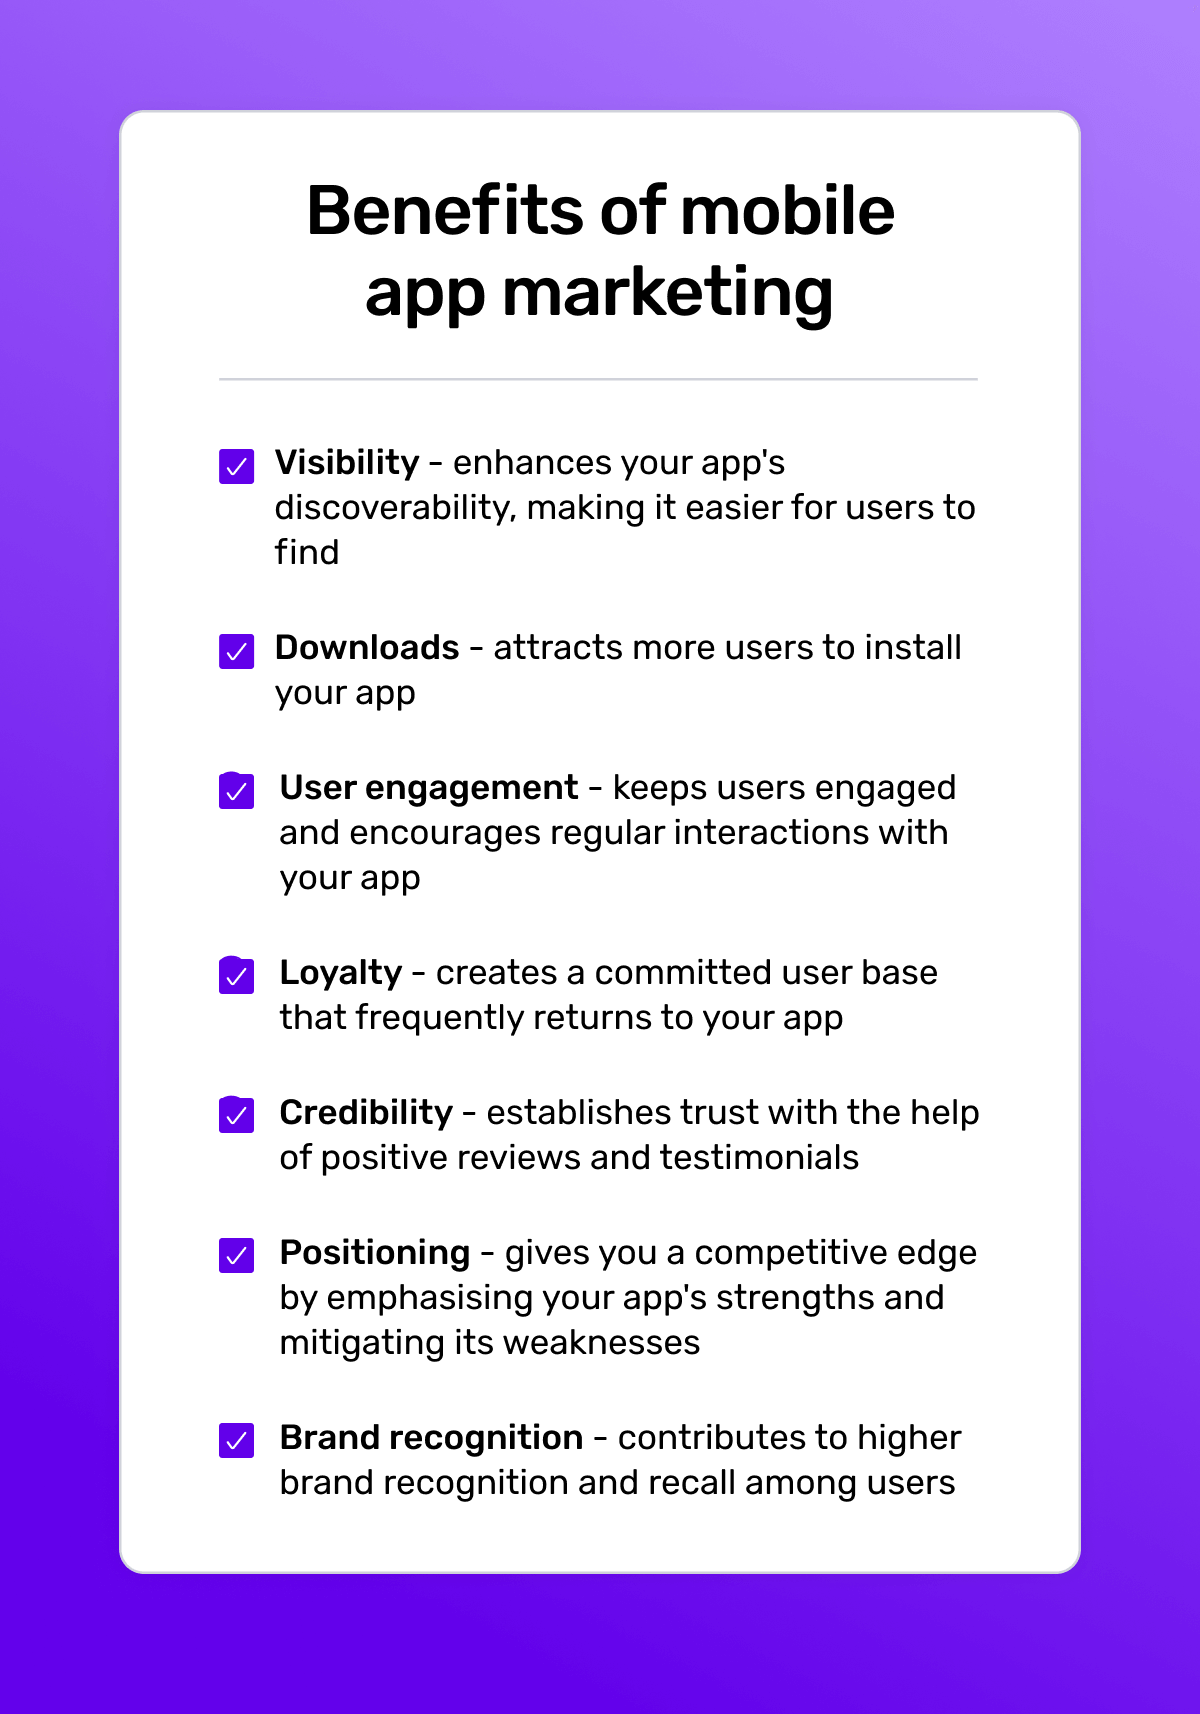 Benefits of mobile app marketing